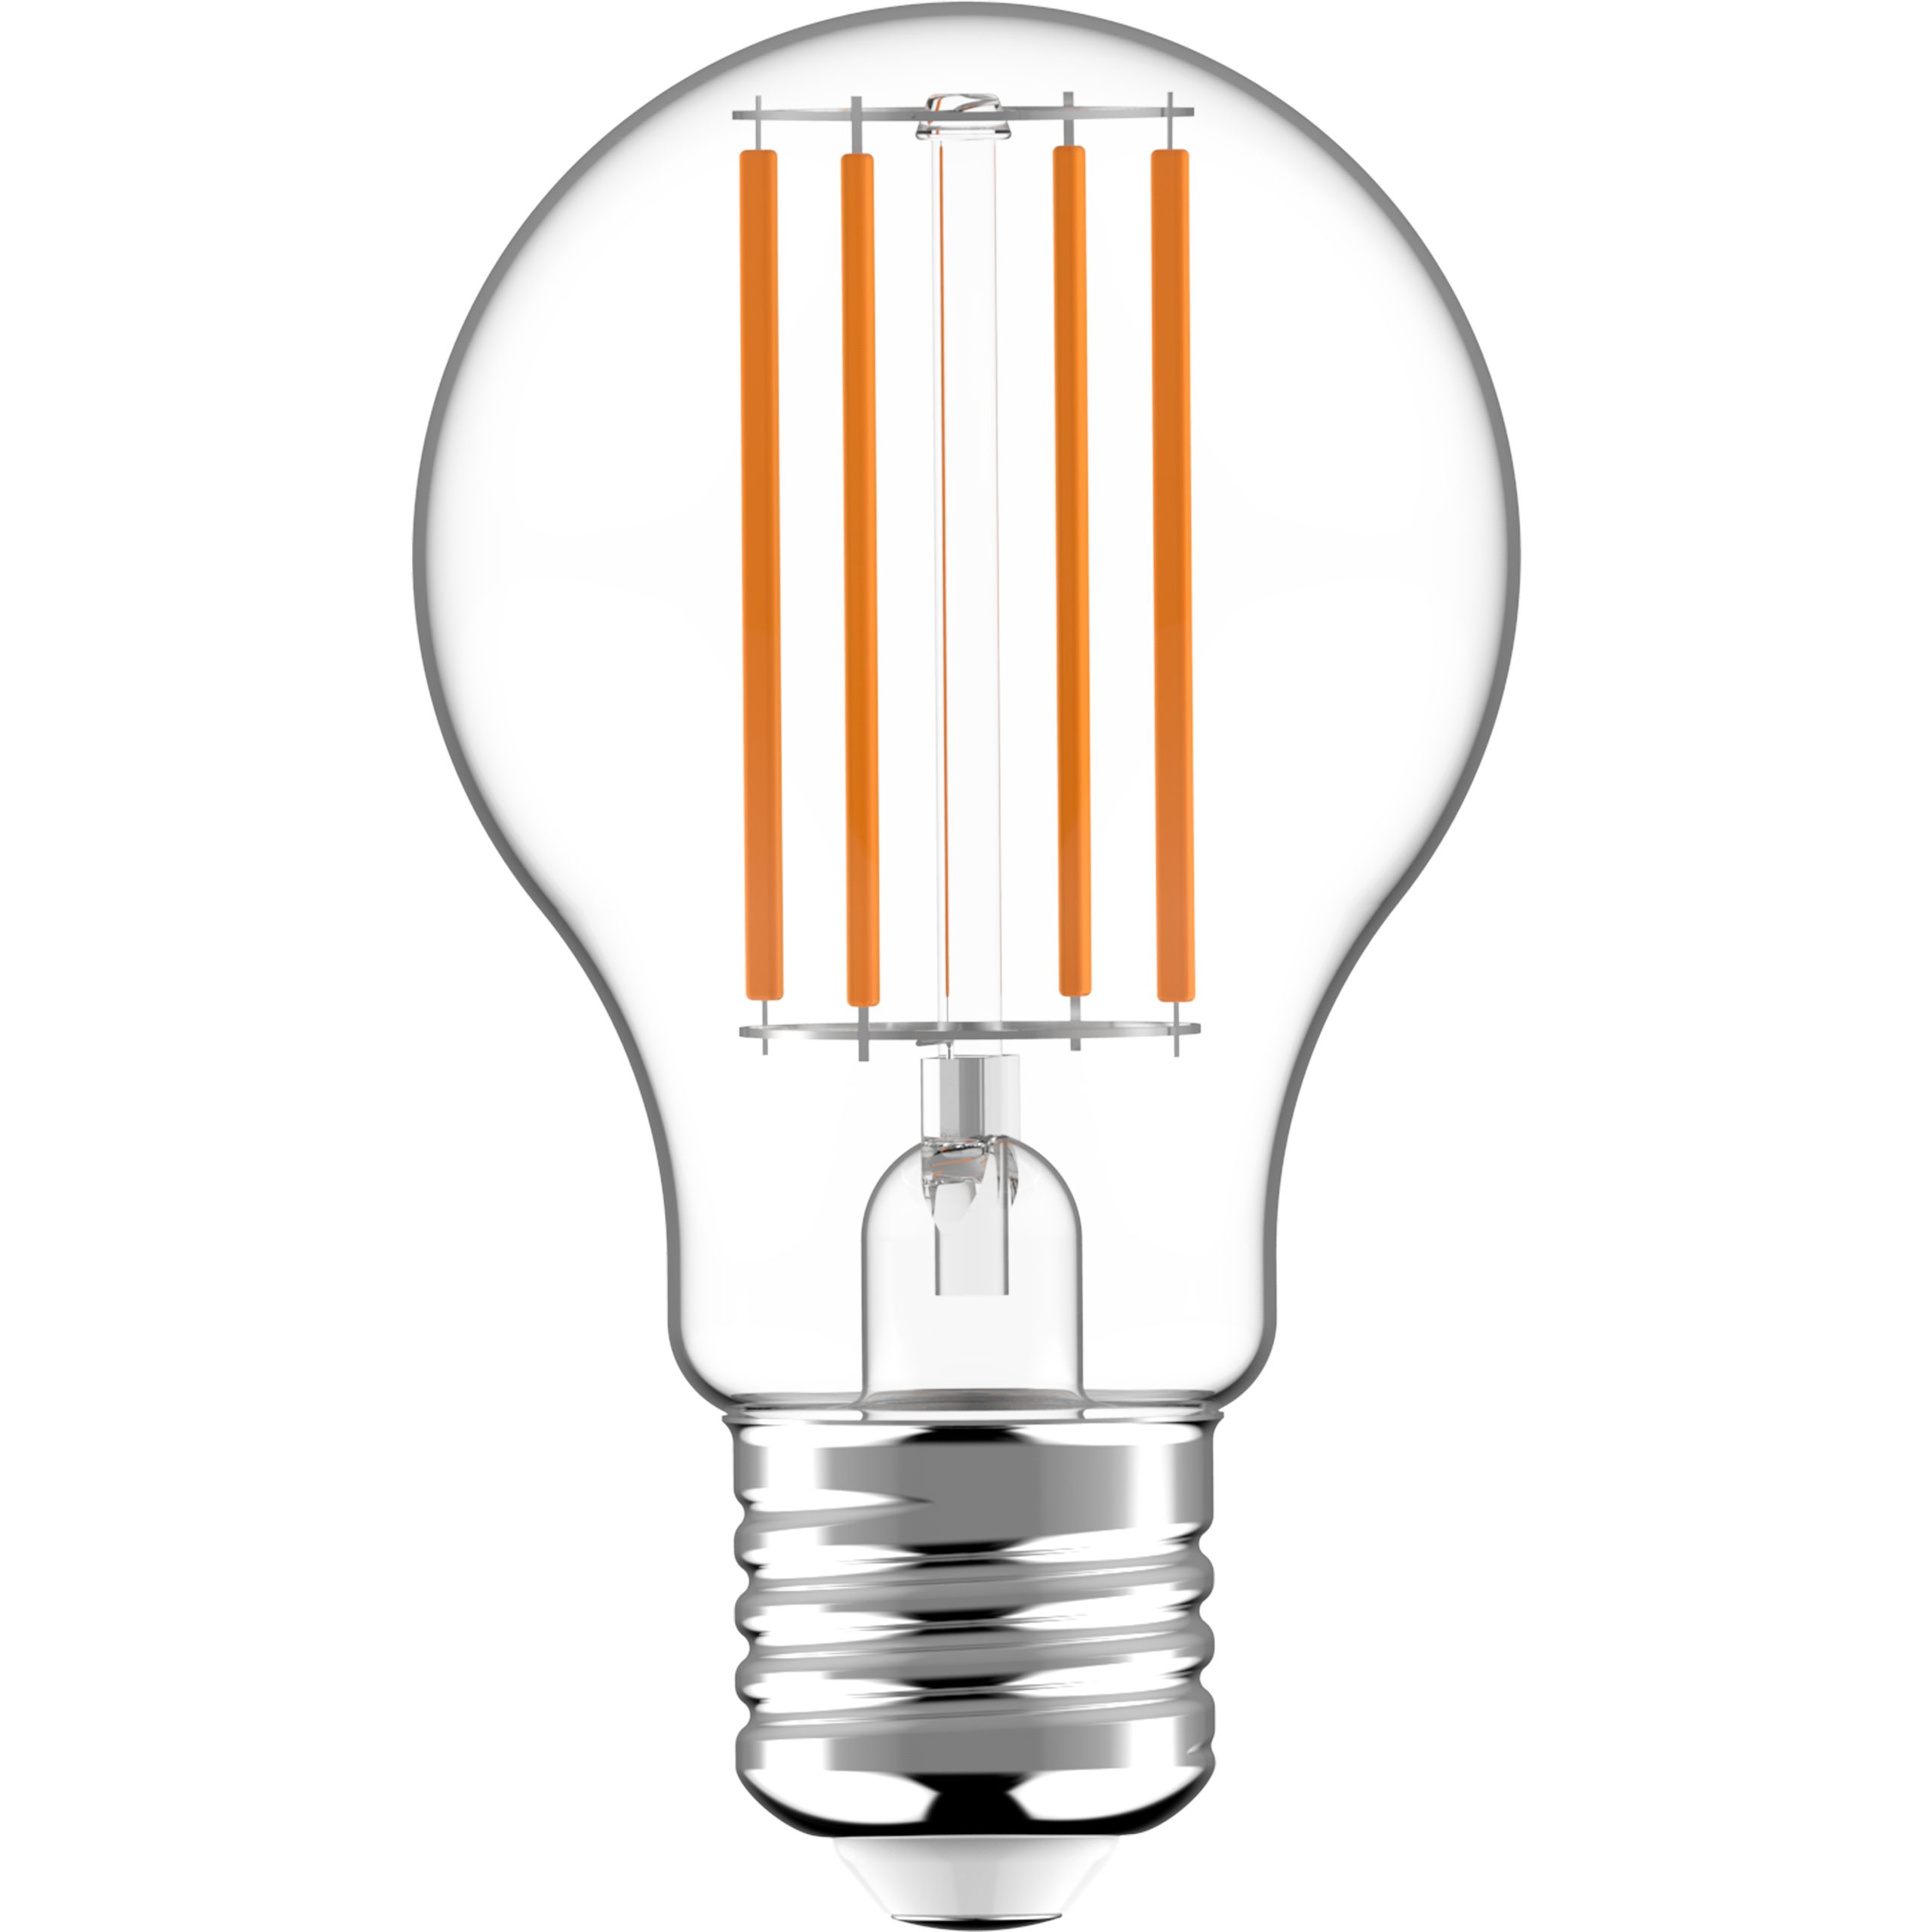 LED's light LED-Leuchtmittel 0620164 LED Birne, E27, E27 2,2W warmweiß Klar A60 - 50.000h Haltbarkeit